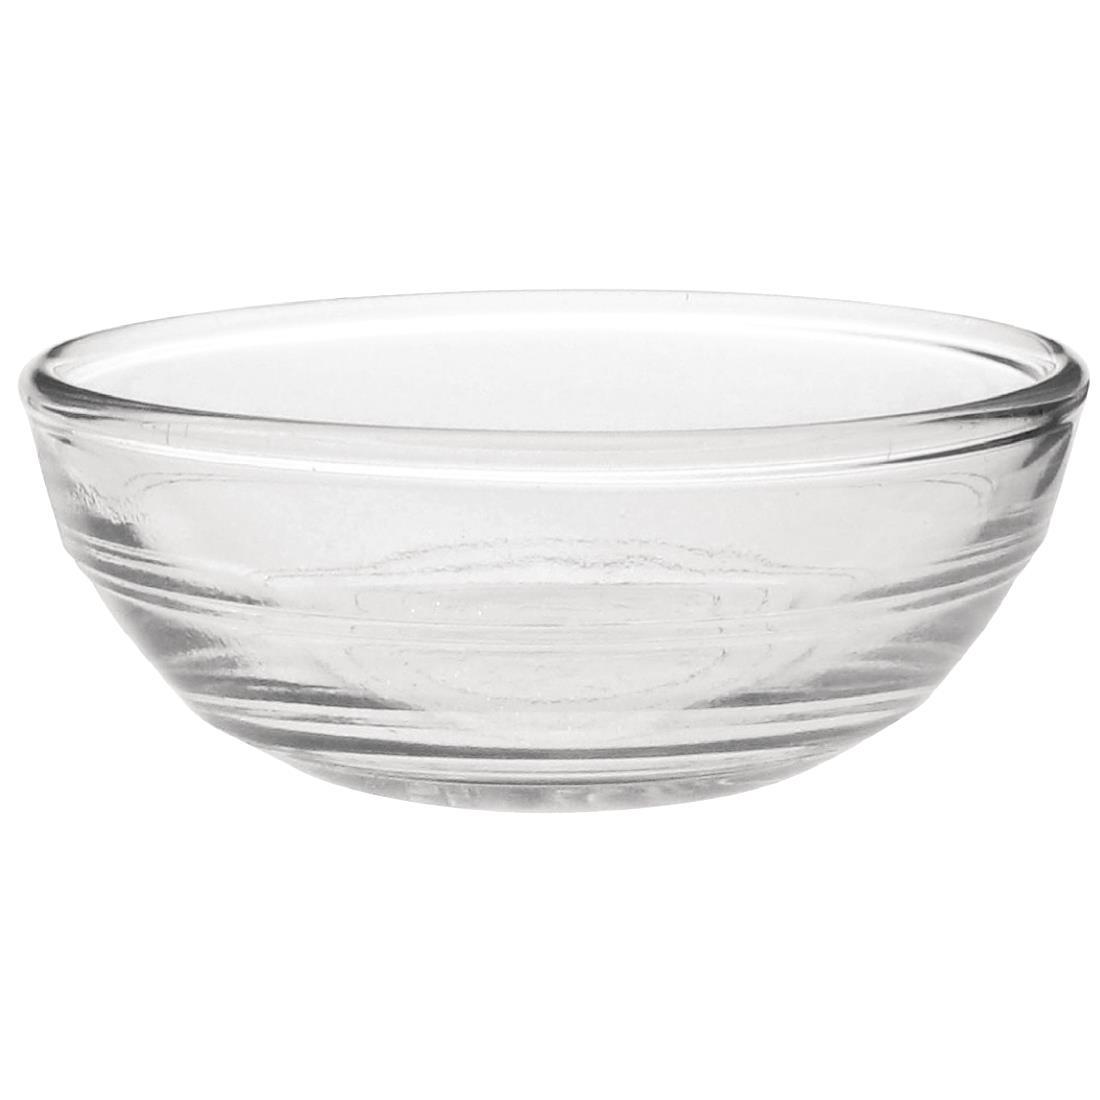 Arcoroc Chefs Glass Bowl 0.035 Ltr (Pack of 6) - DK770  - 1